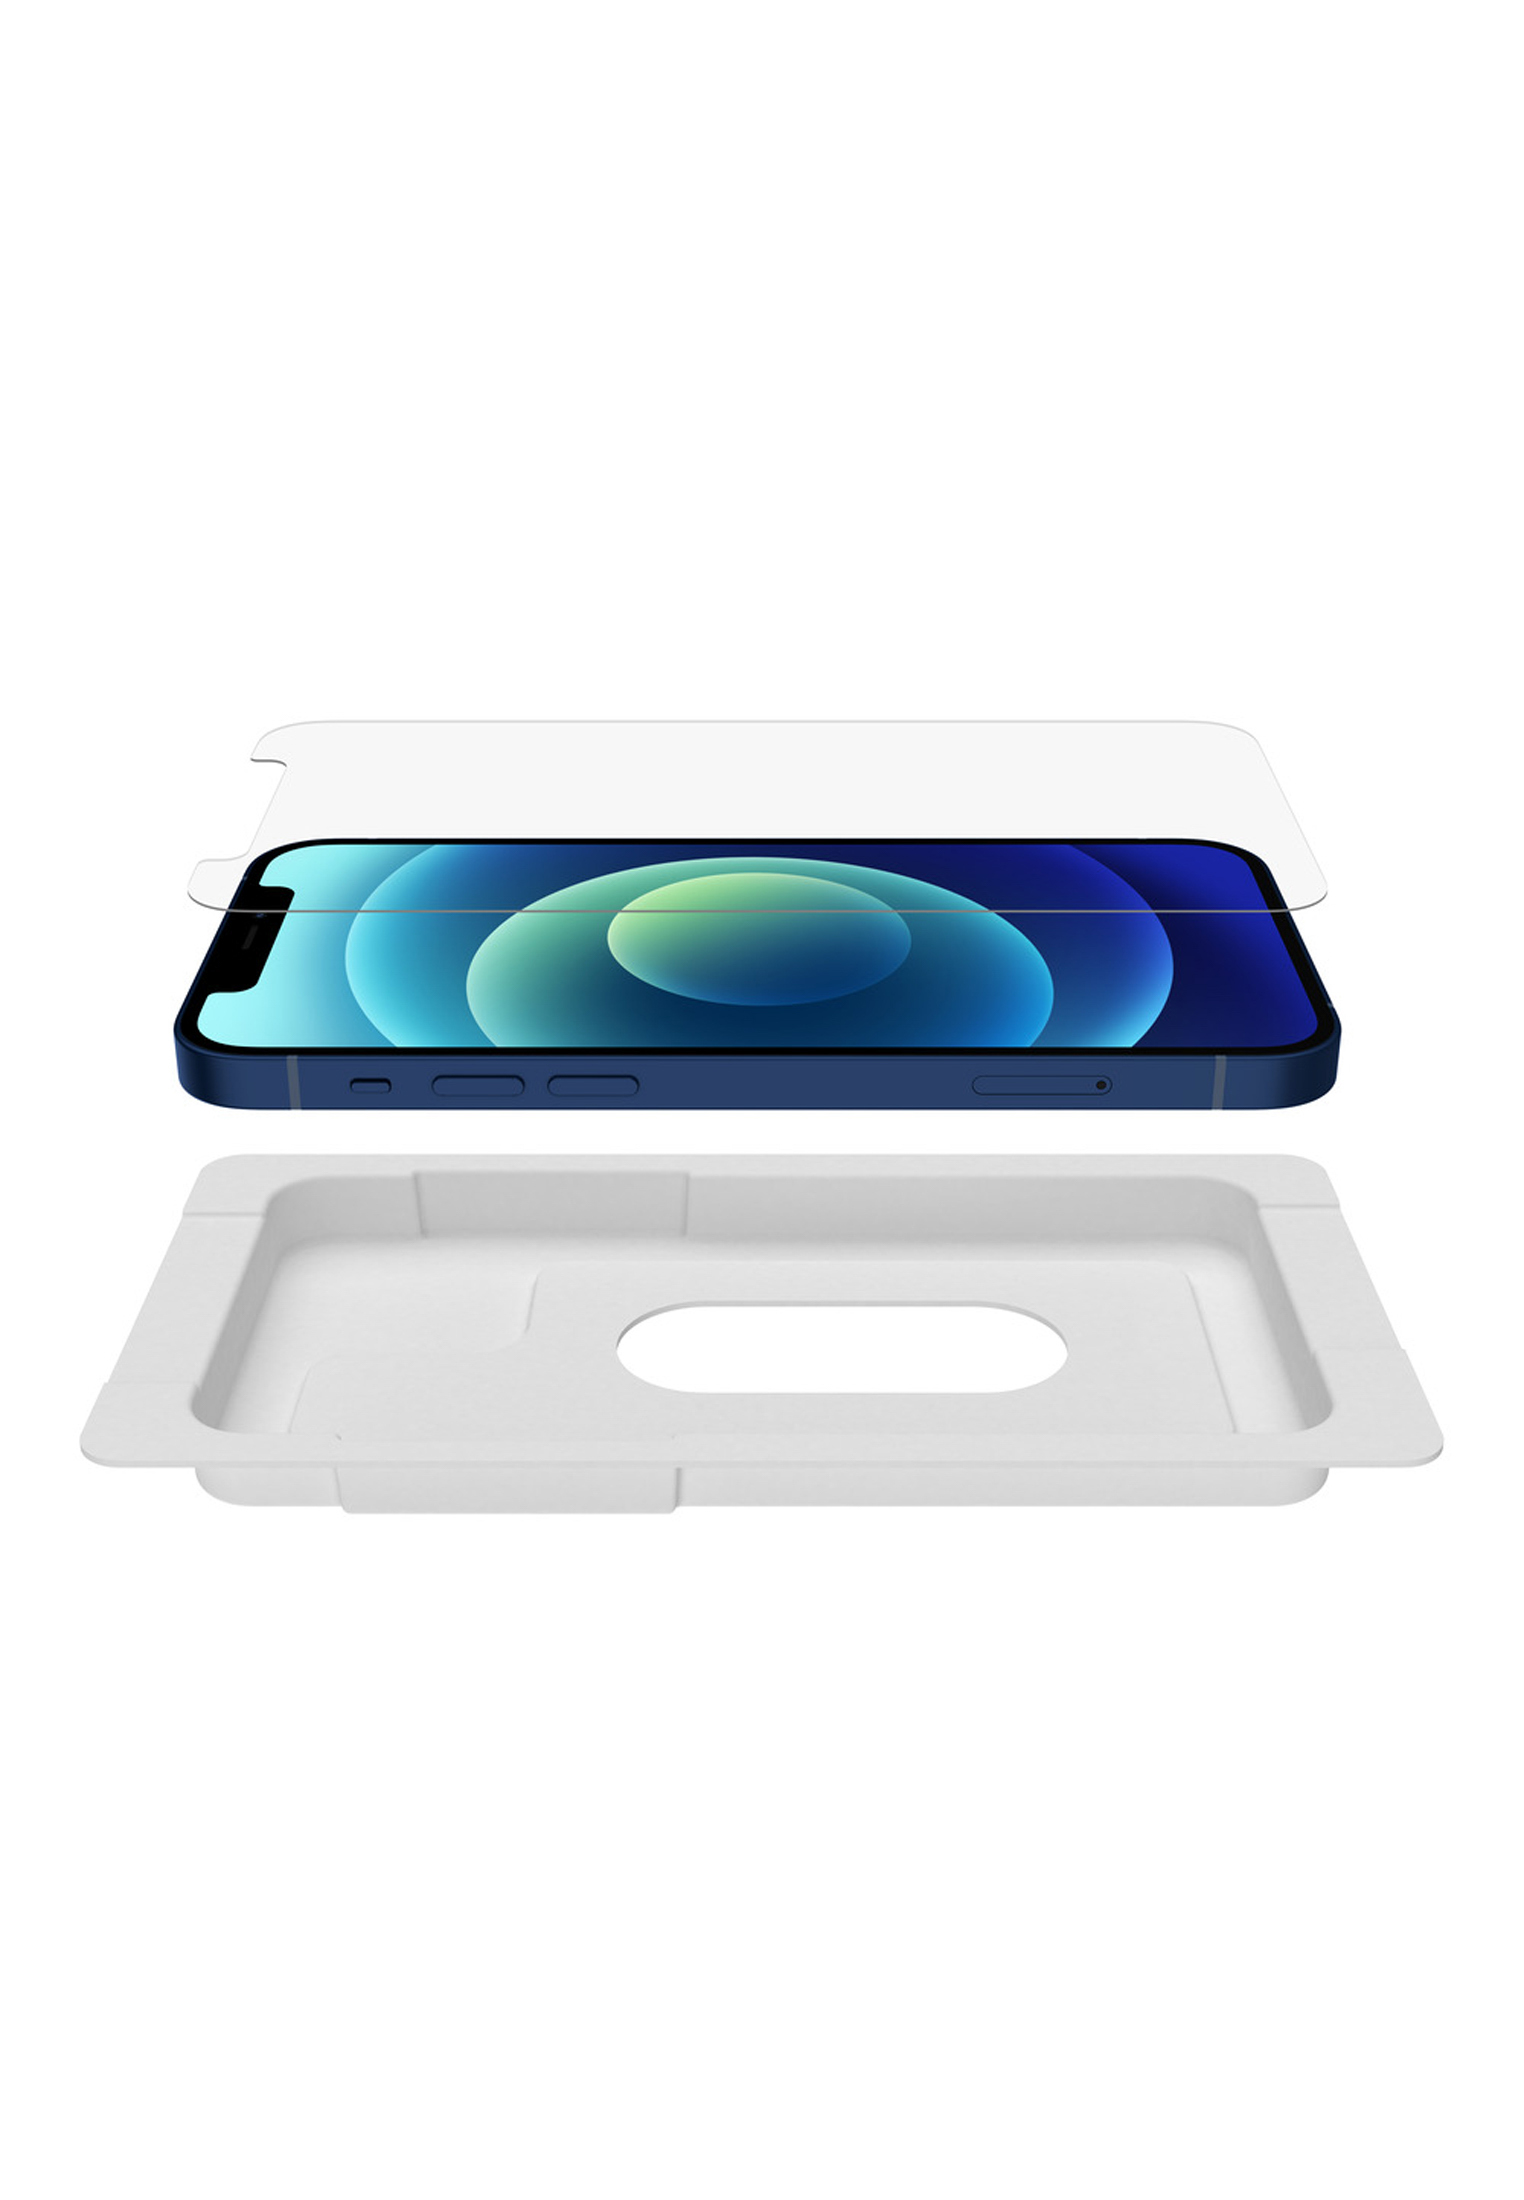 iPhone Antimikrobieller Apple SCREENFORCE™ BELKIN 12) Displayschutz(für UltraGlass